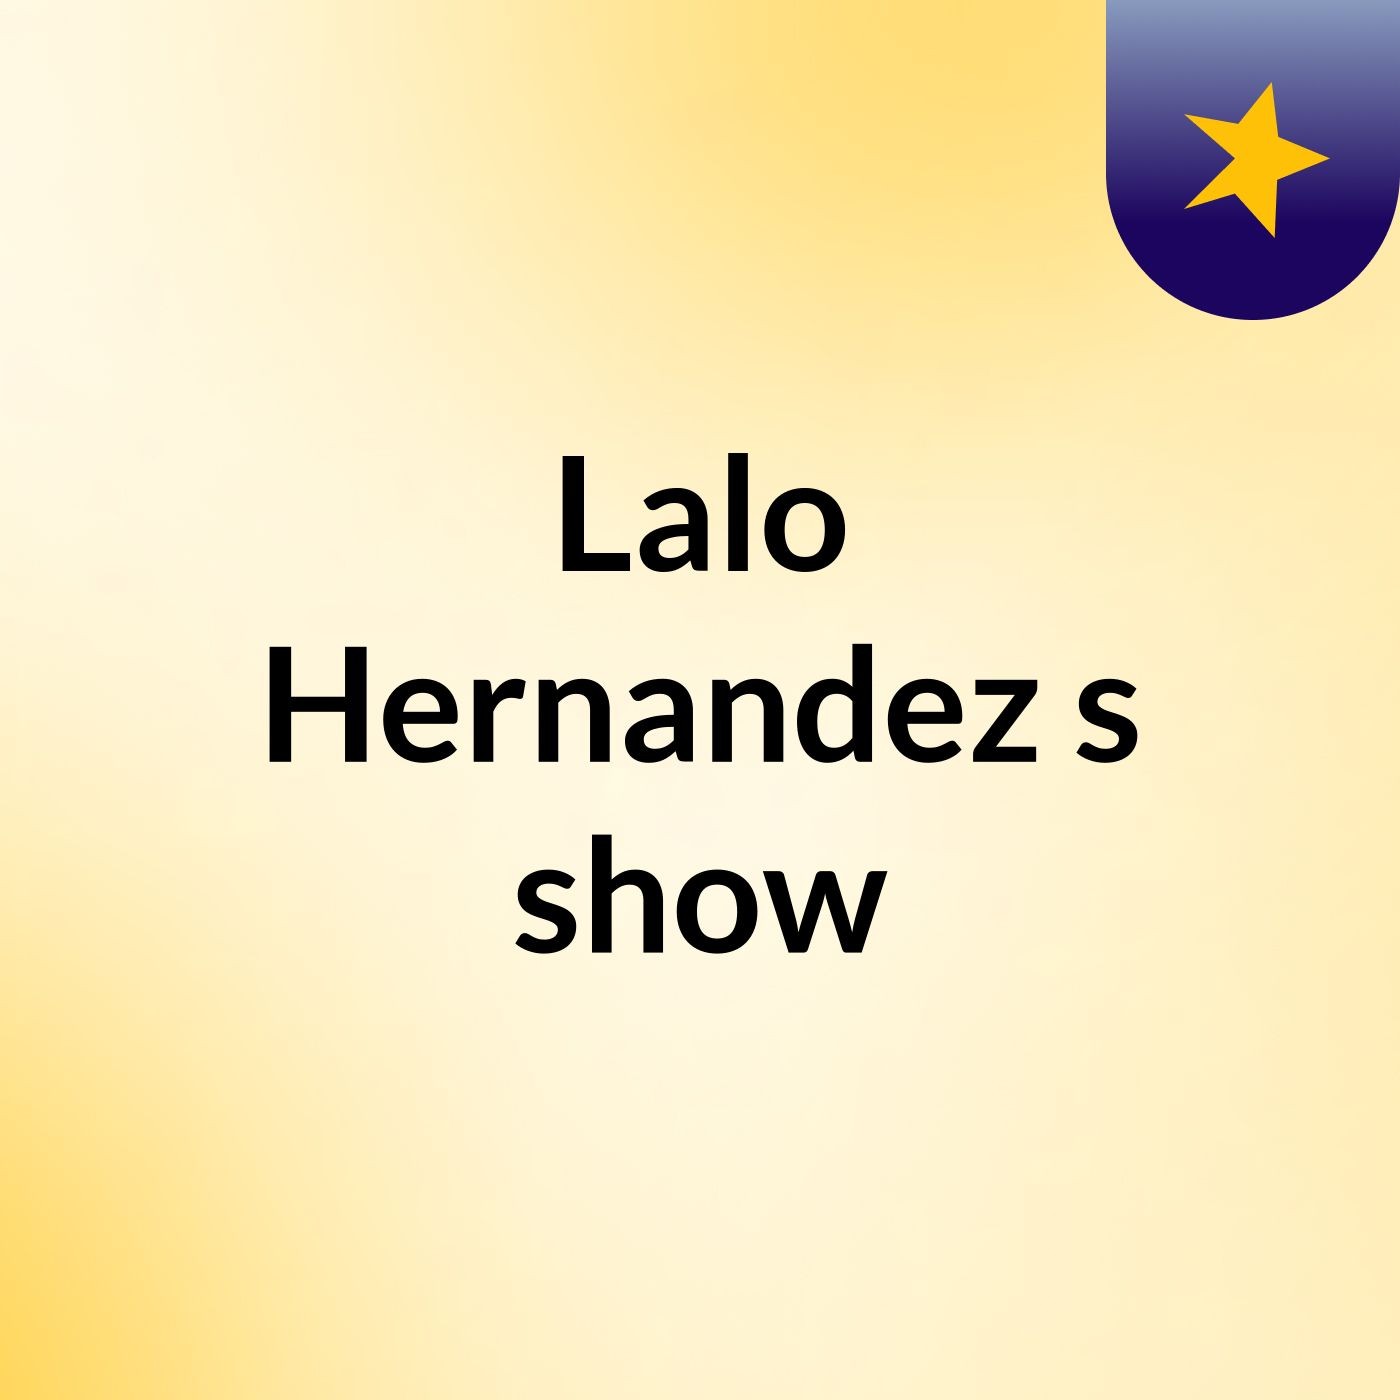 Lalo Hernandez's show